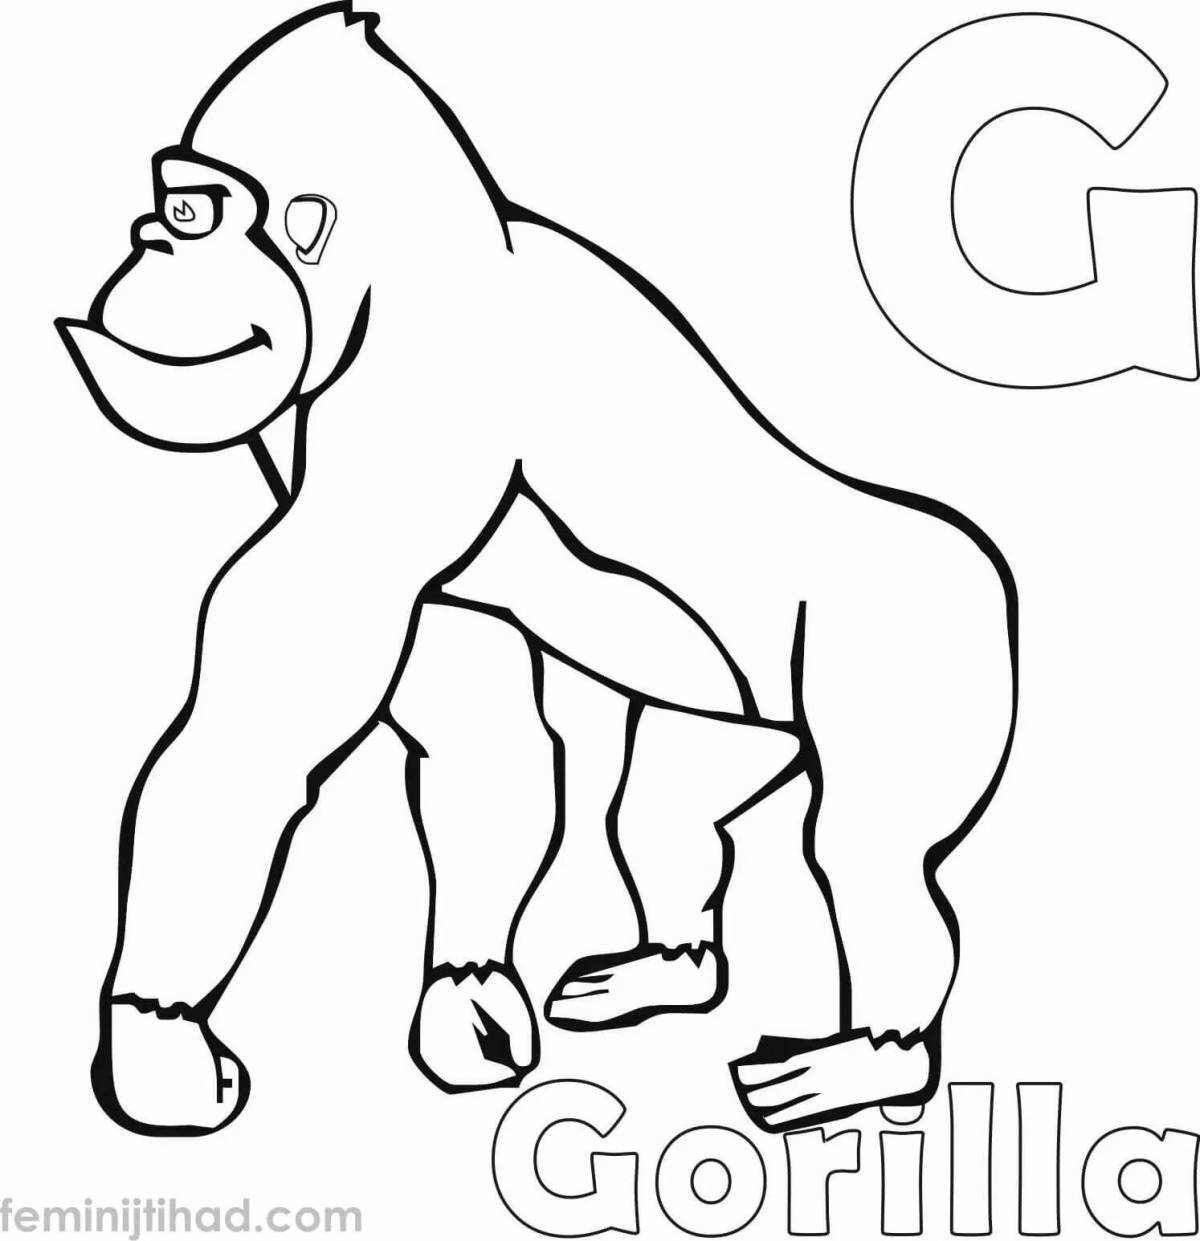 Impressive gorilla coloring book for kids